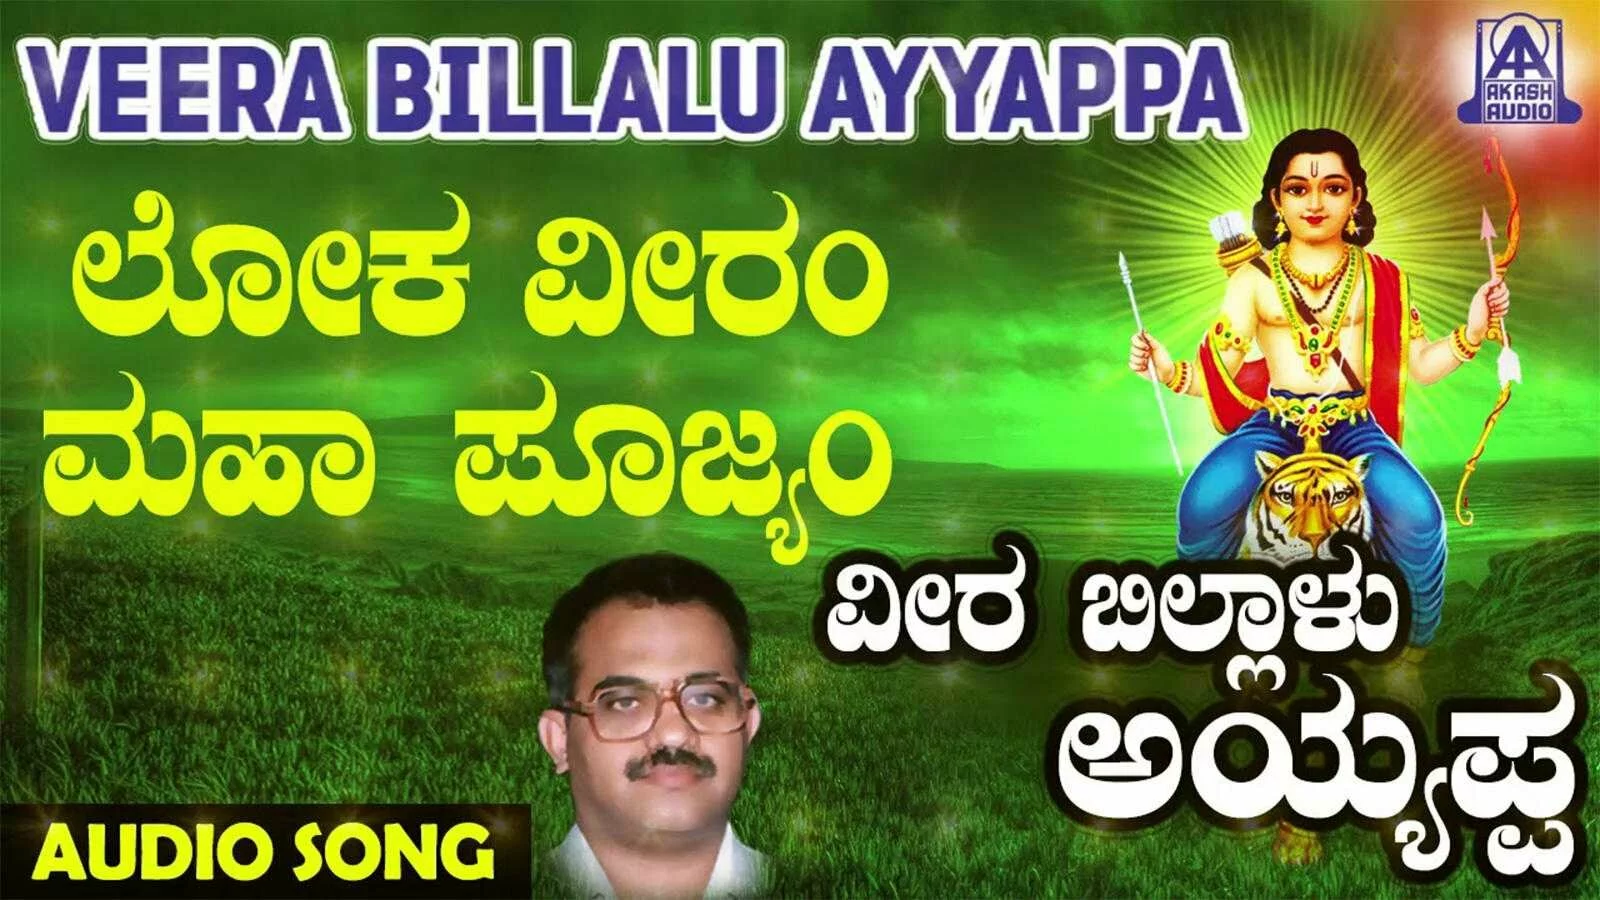 Veera Billalu Ayyappa Song: Kannada Bhakti Popular Devotional Song 'Loka Veeram Maha Pujyam' Sung By Narasimha Nayak | Lifestyle - Times of India Videos